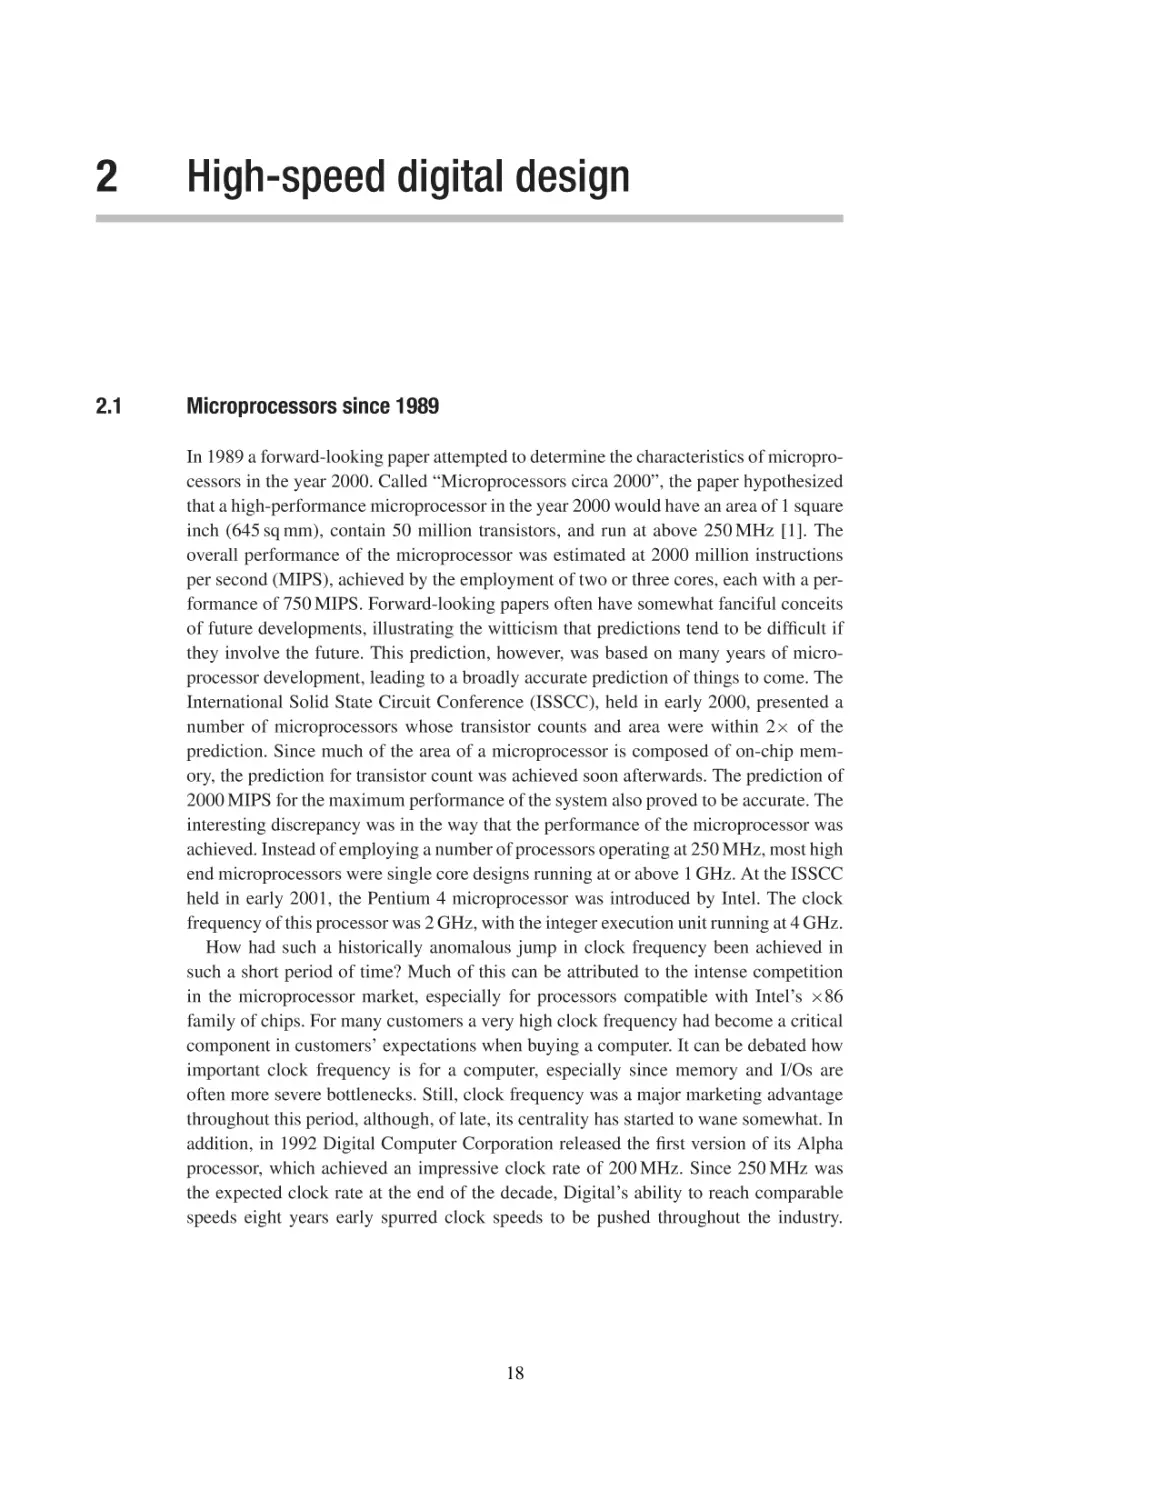 2 High-speed digital design
2.1 Microprocessors since 1989